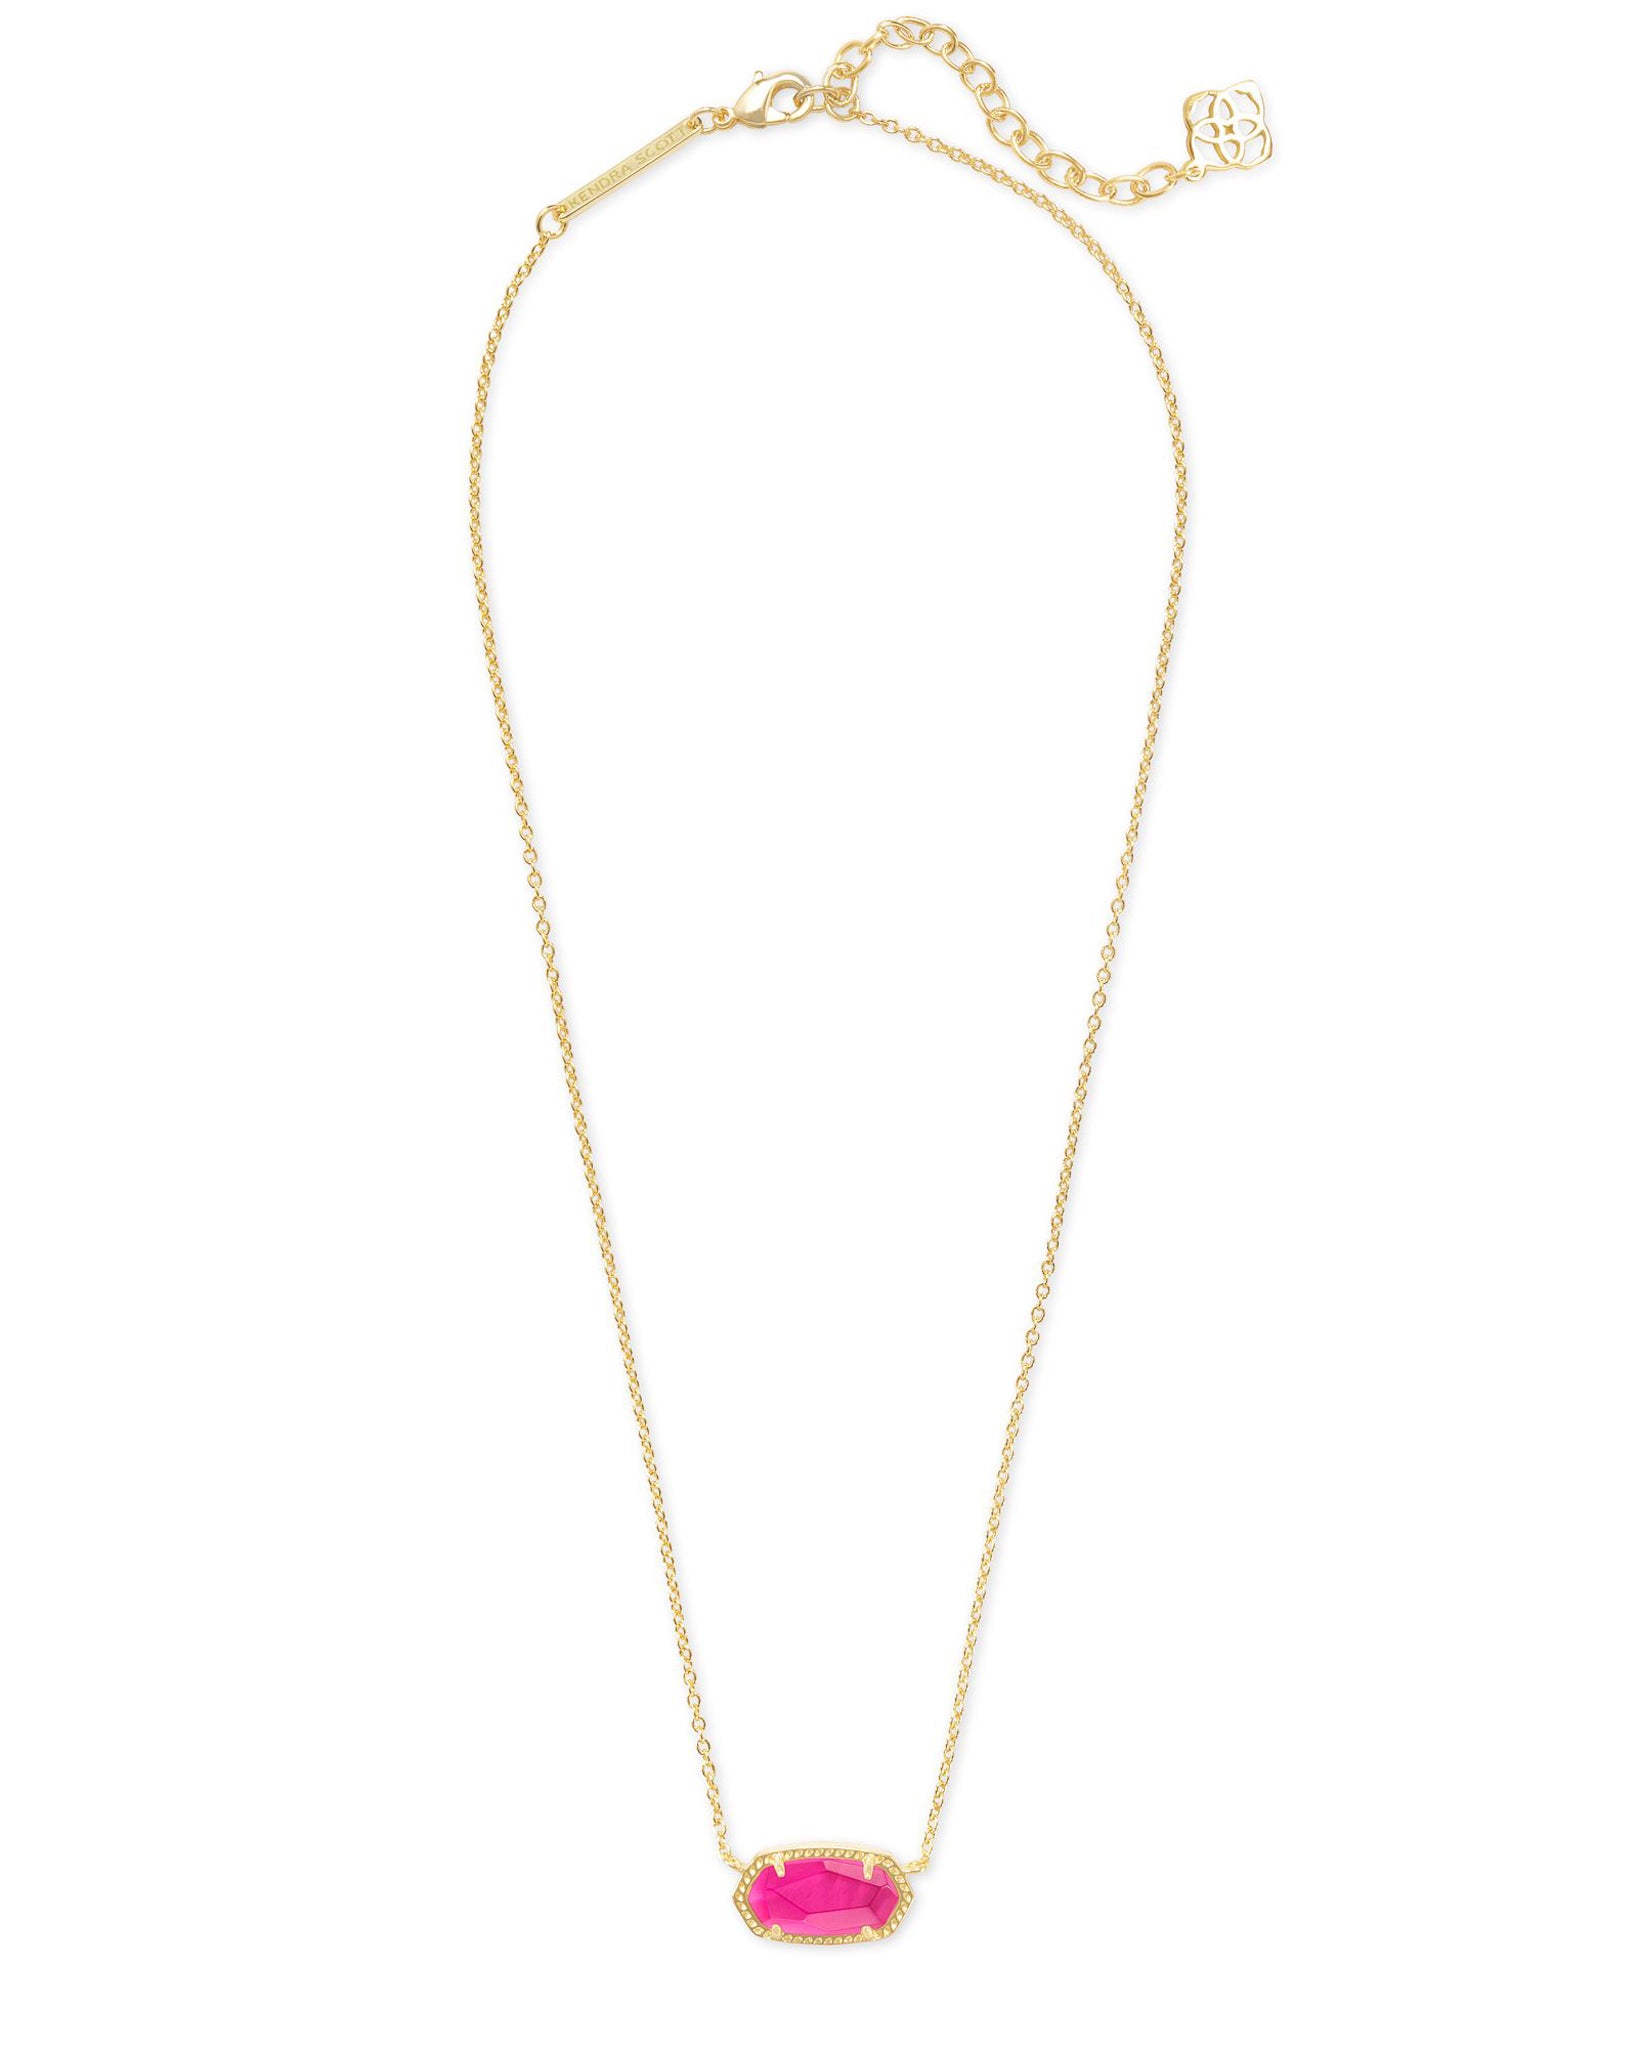 Kendra Scott Elisa Oval Pendant Necklace in Azalea Illusion and Gold